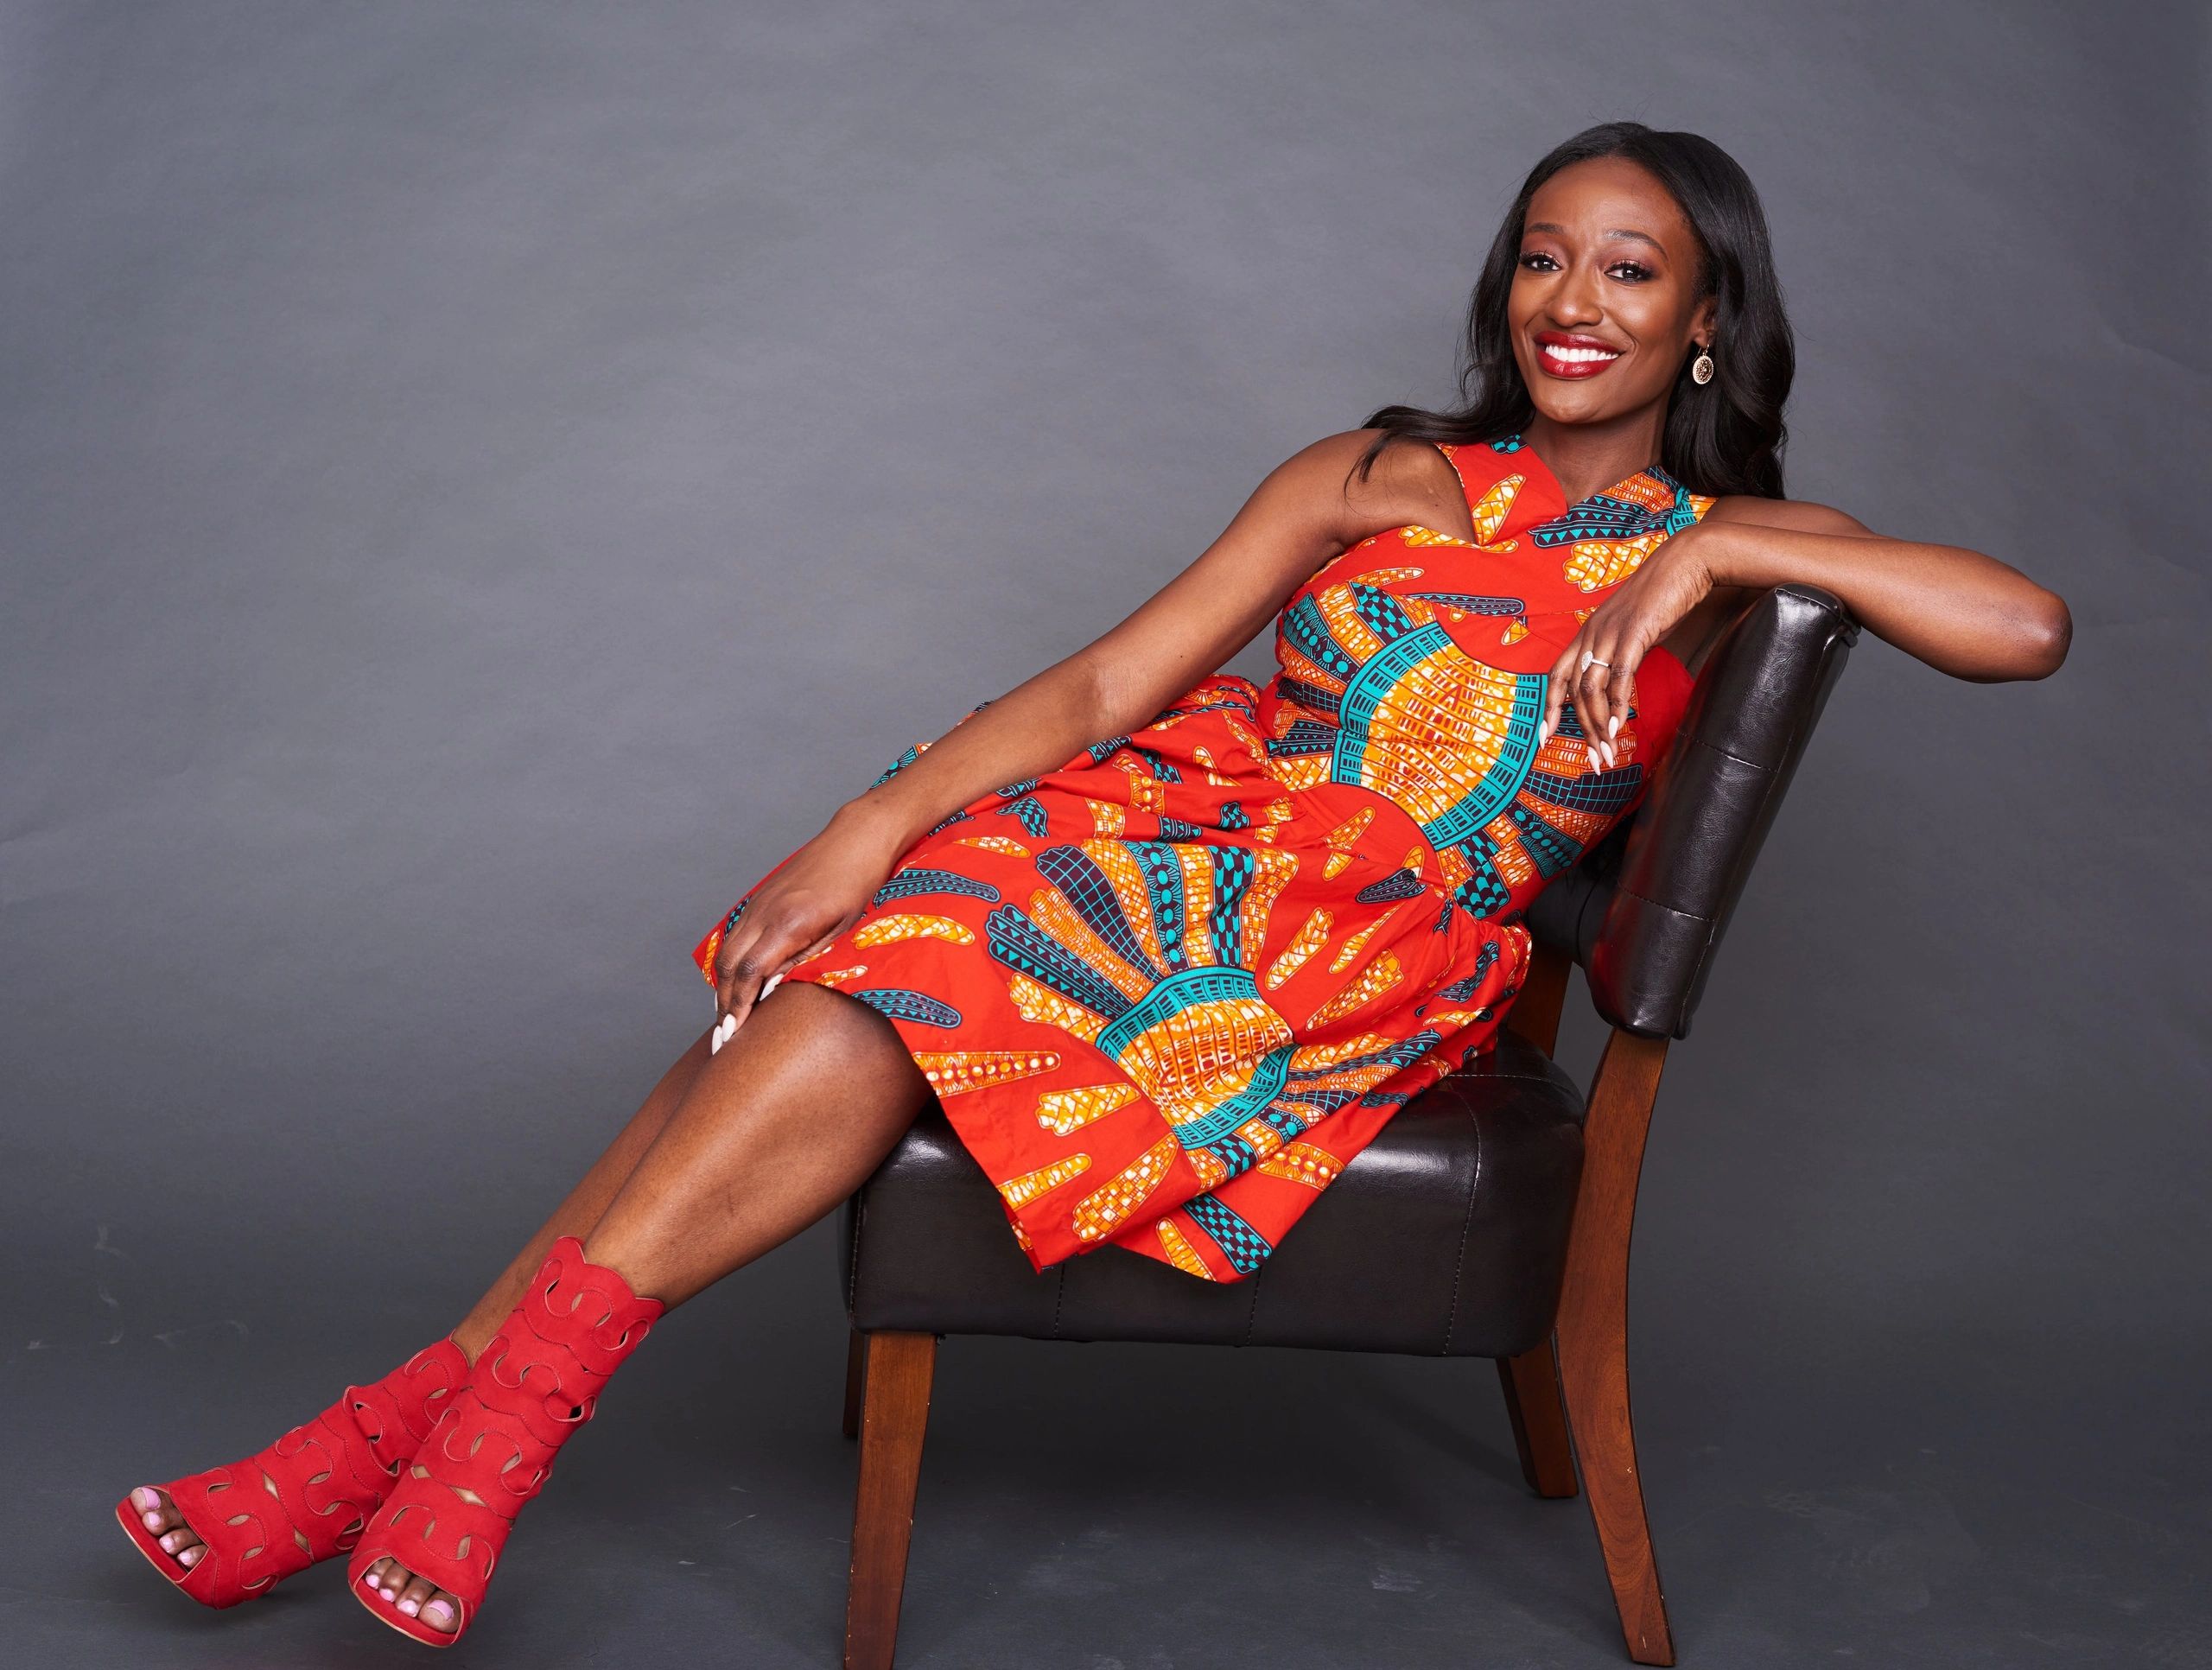 rachelle akuffo ankara africa ghana fashion smile anchor news cgtn cctv entrepreneur media coach